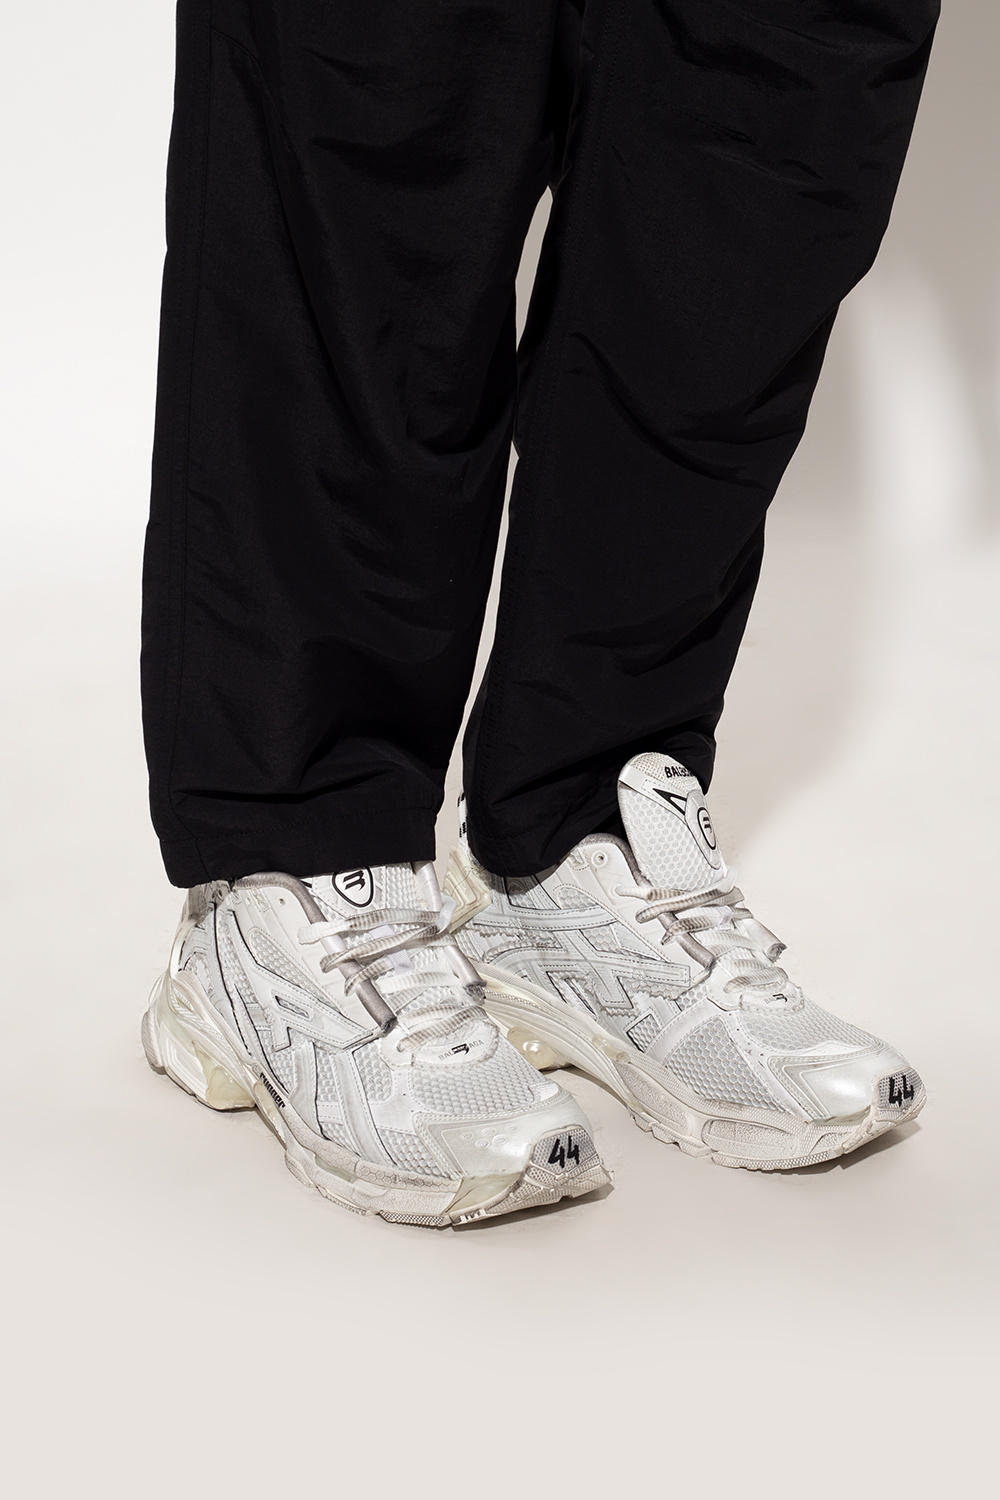 Balenciaga ‘Runner’ Women sneakers